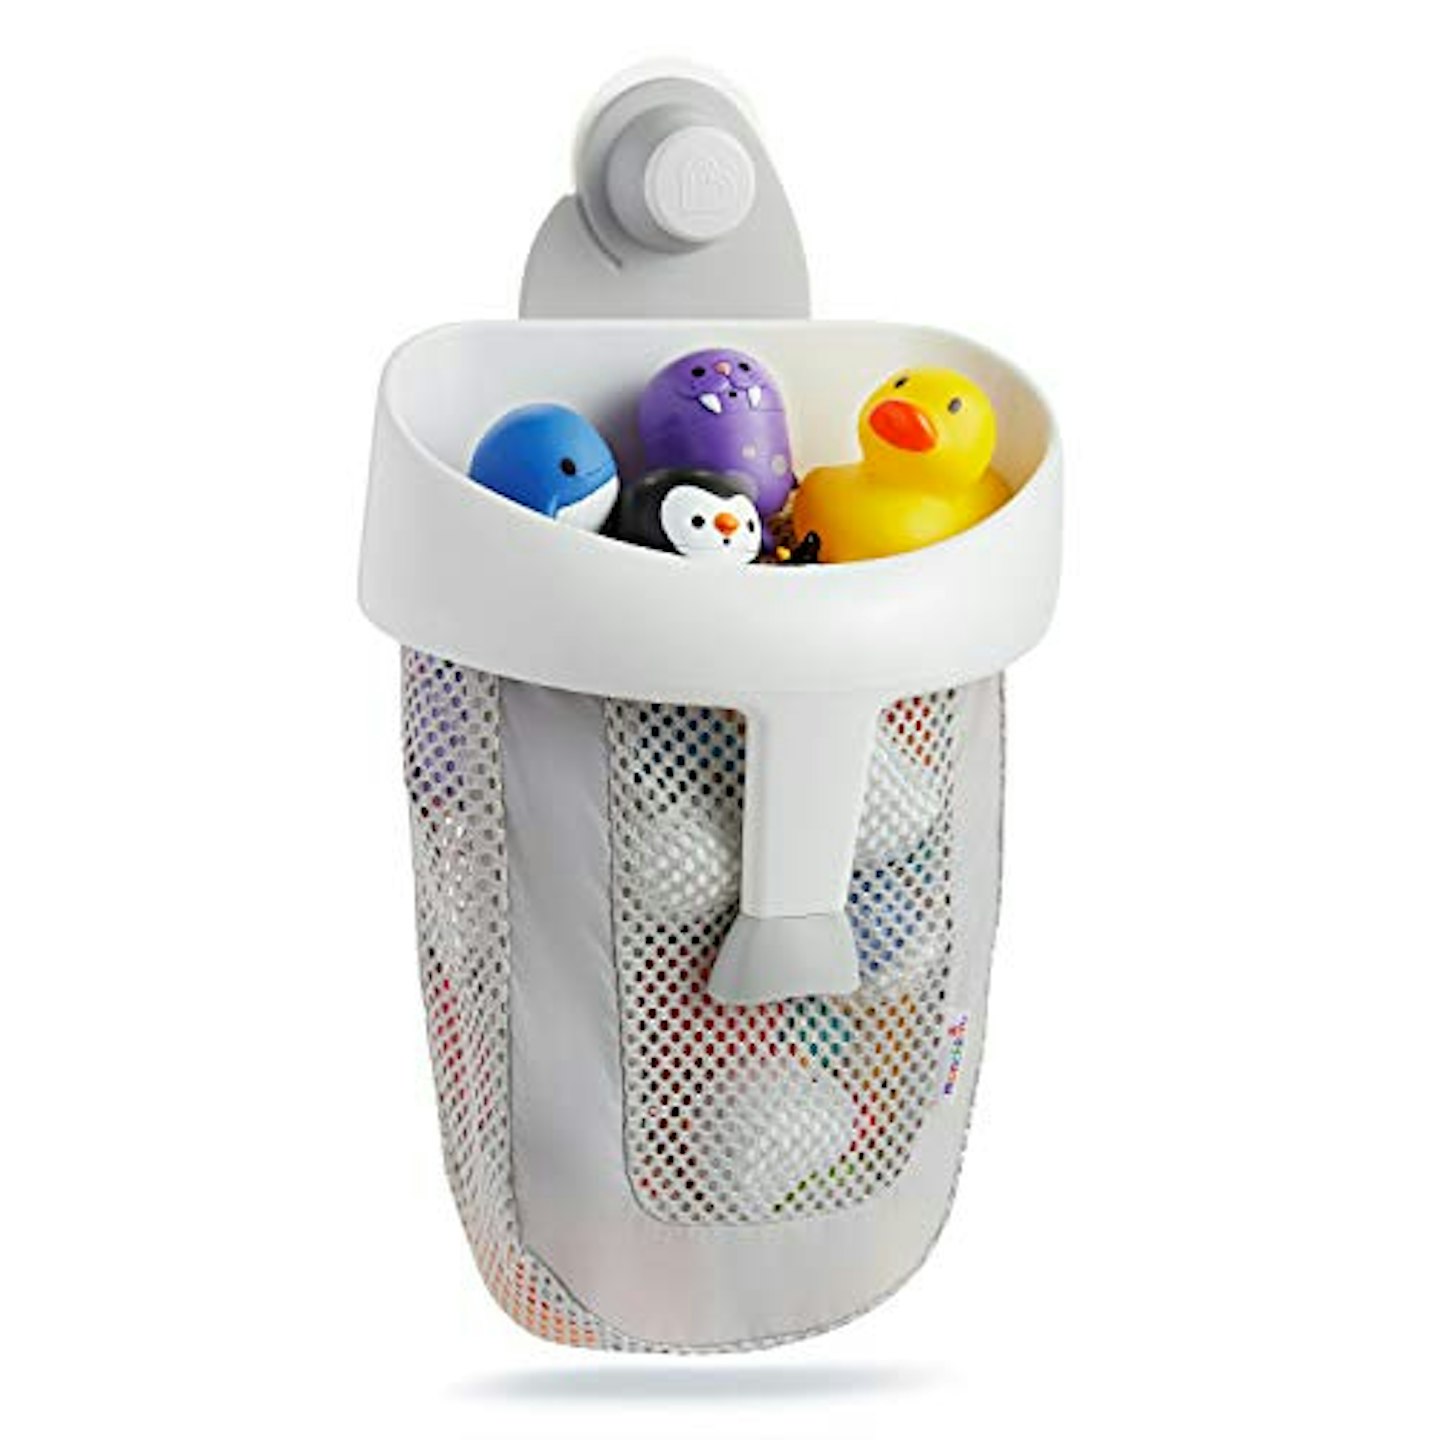 ✨ Baby Bath Toy Storage Ideas - Keep Everything Tidy! 🛁